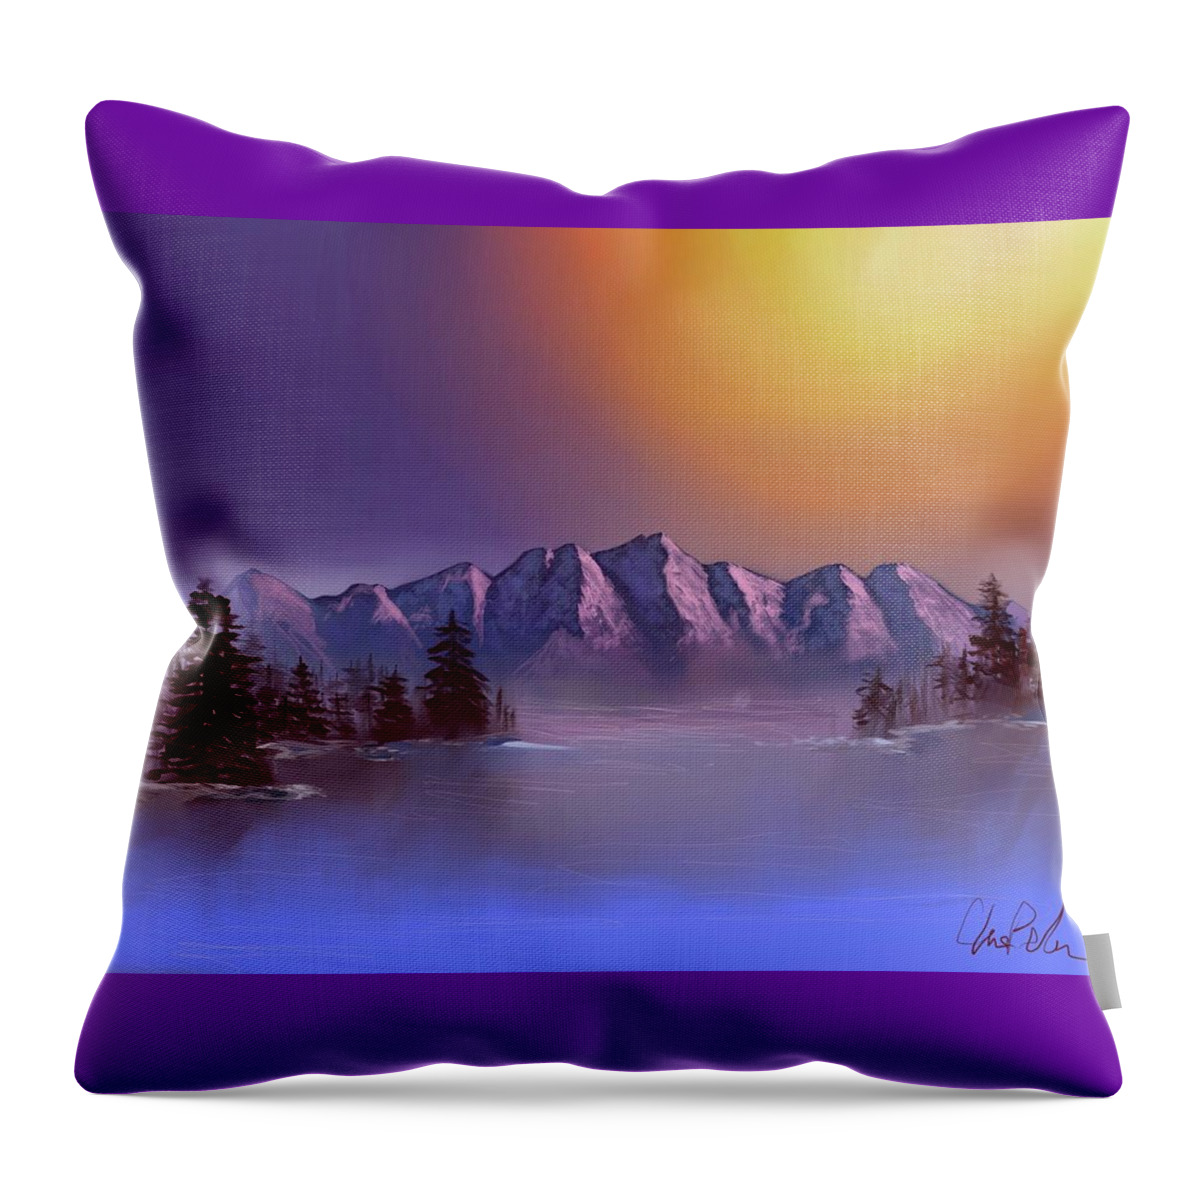 Purple Throw Pillow featuring the digital art Purple Mountain Majesty by C Pelzie